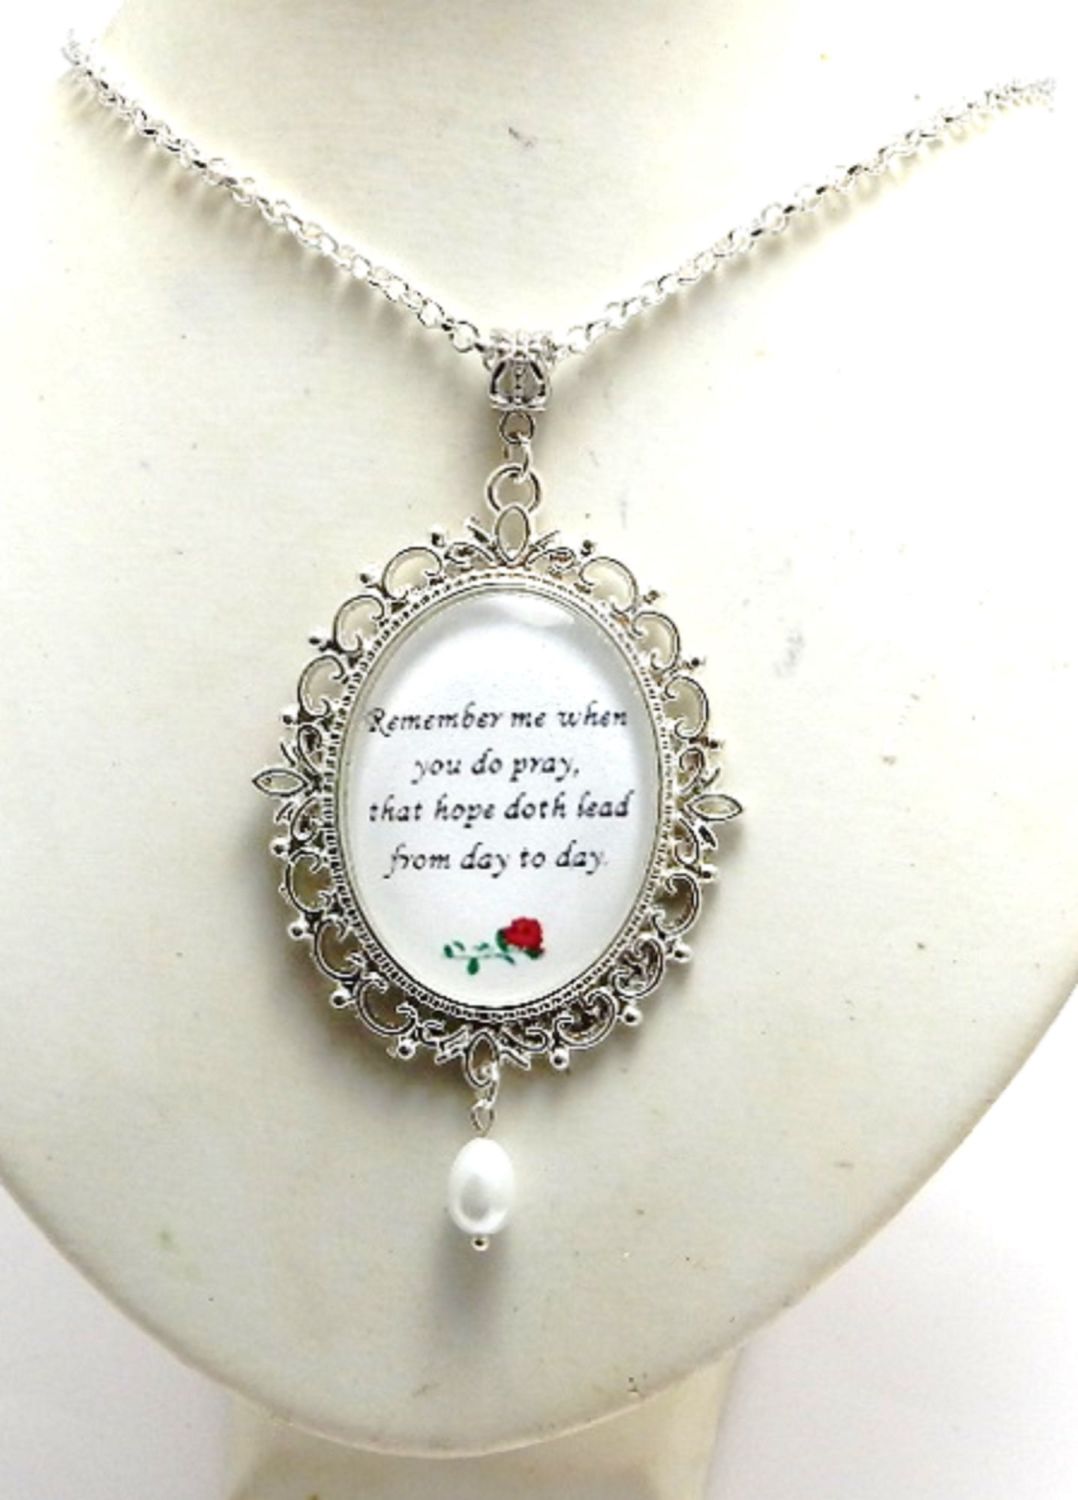 Remember Me When You Do Pray necklace - Anne Boleyn